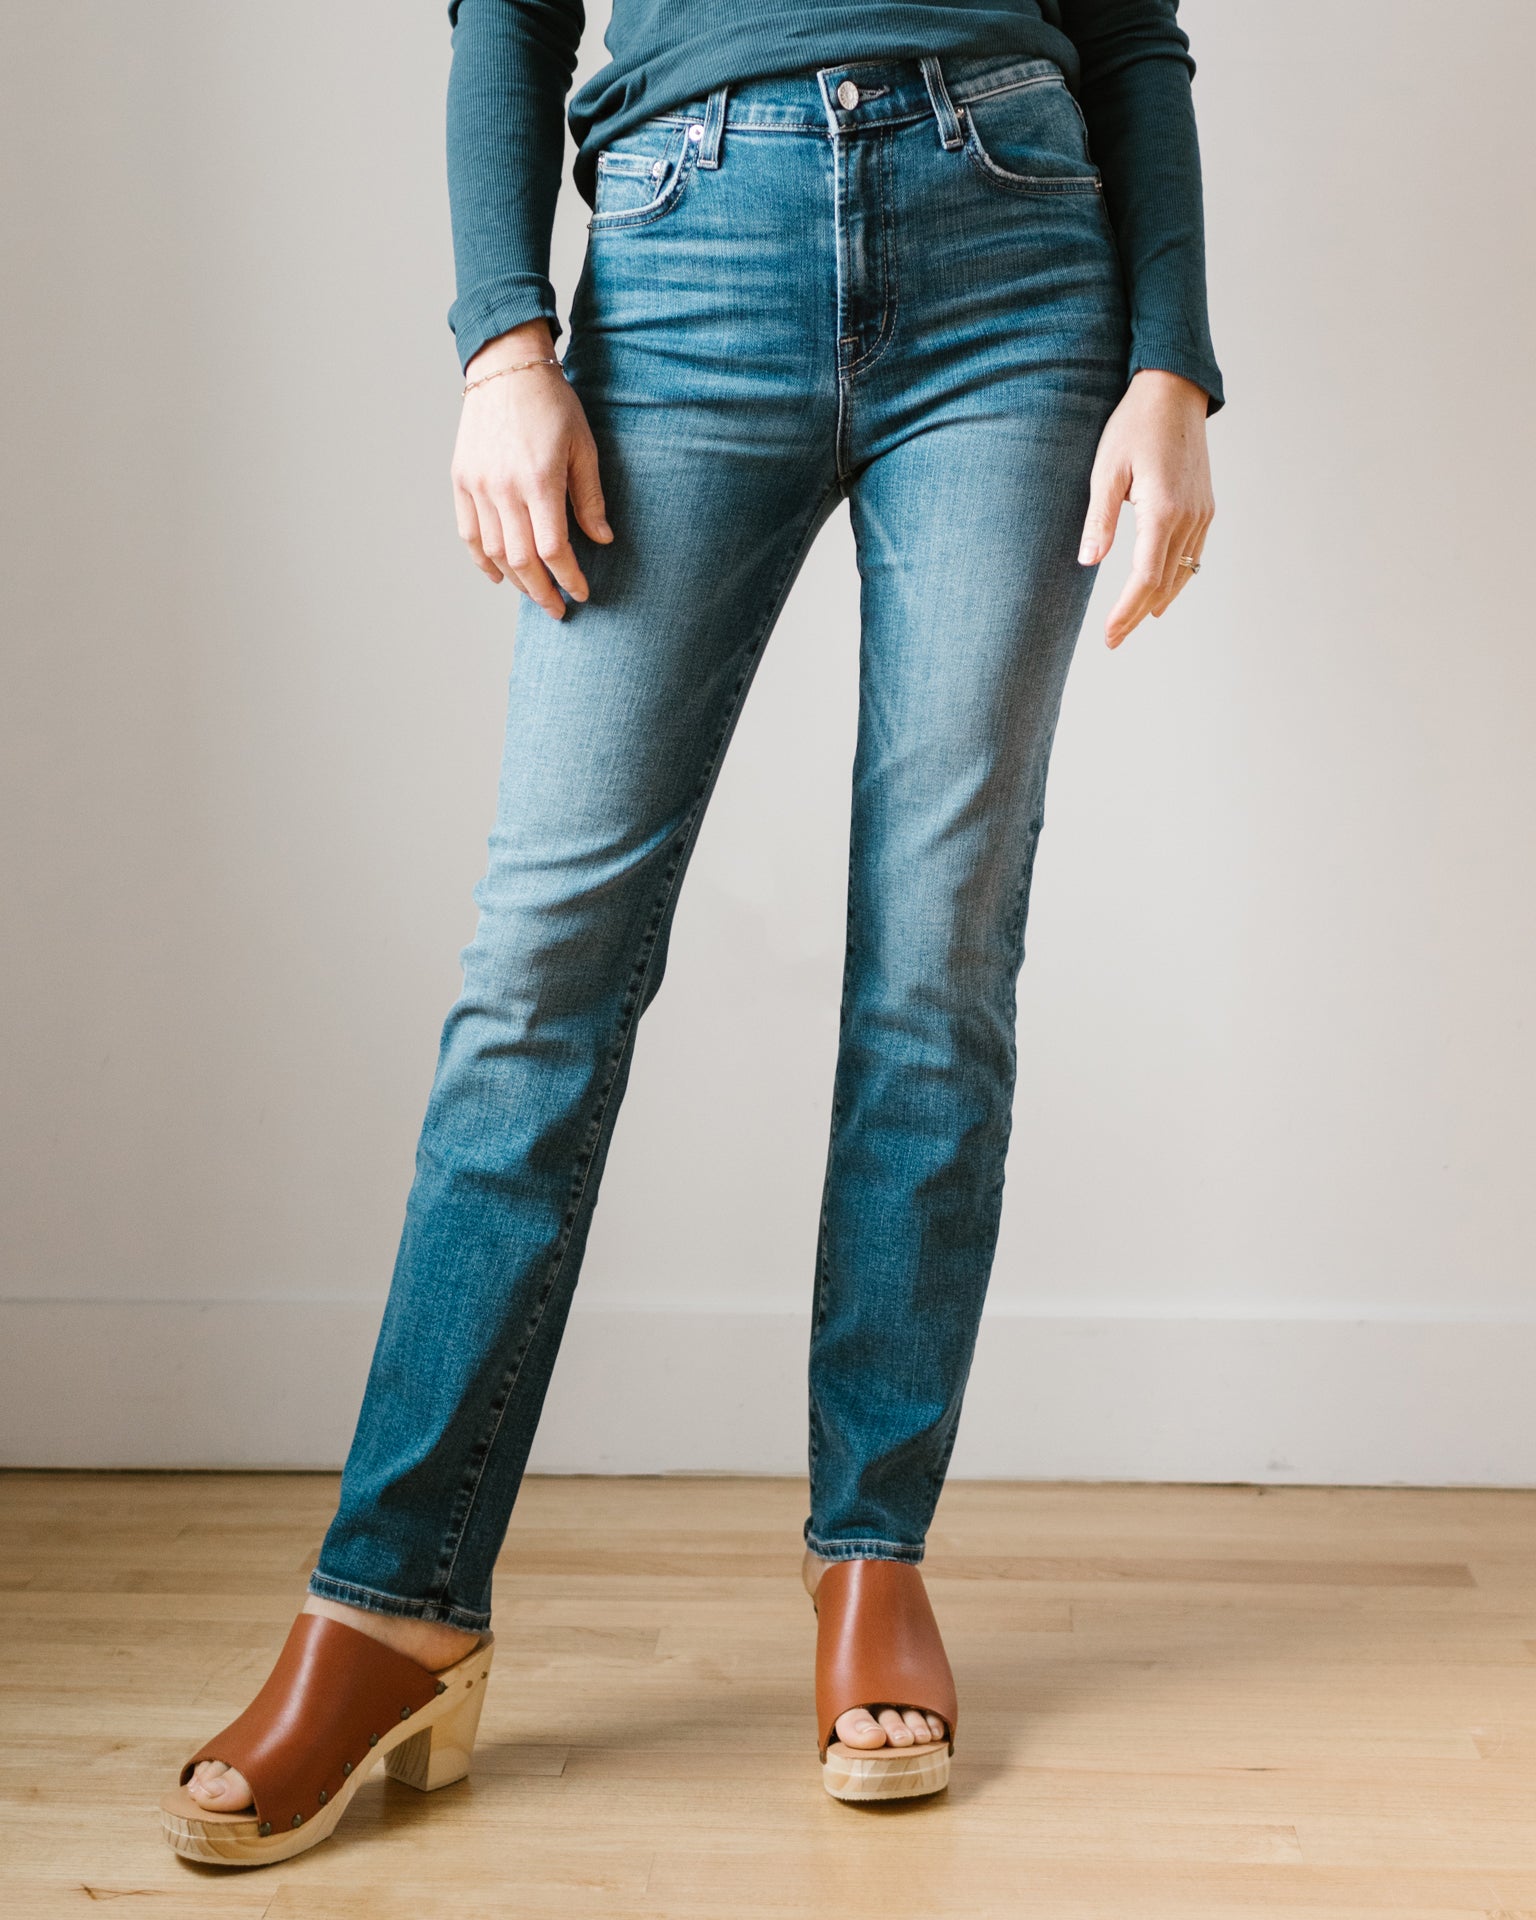 Women's Urban Bliss Blue Straight Jeans